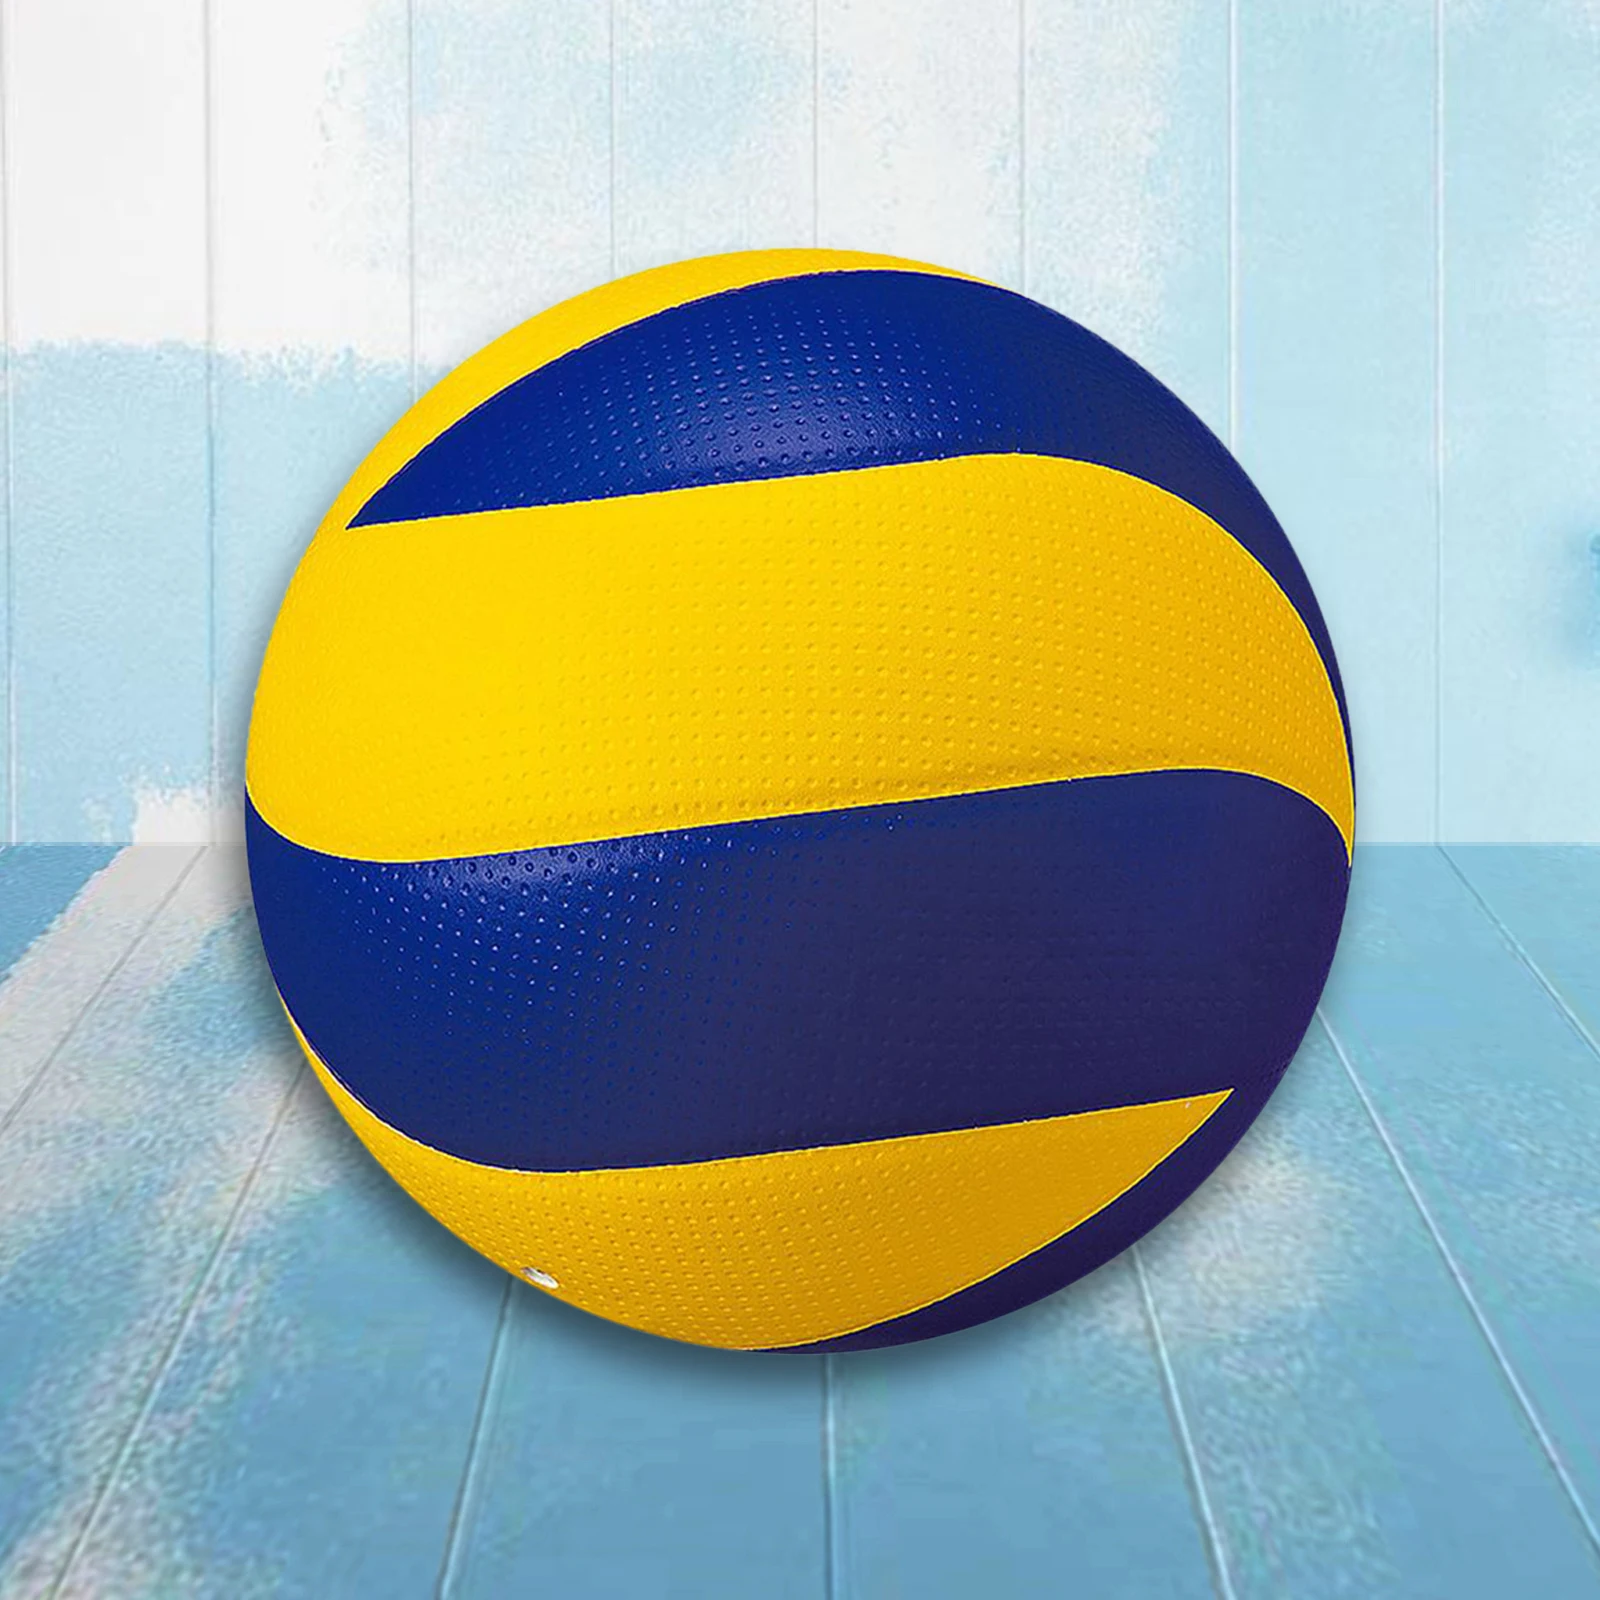 Size 5 Standard Beach Volleyball Outdoor Recreational Ball Game Training Play